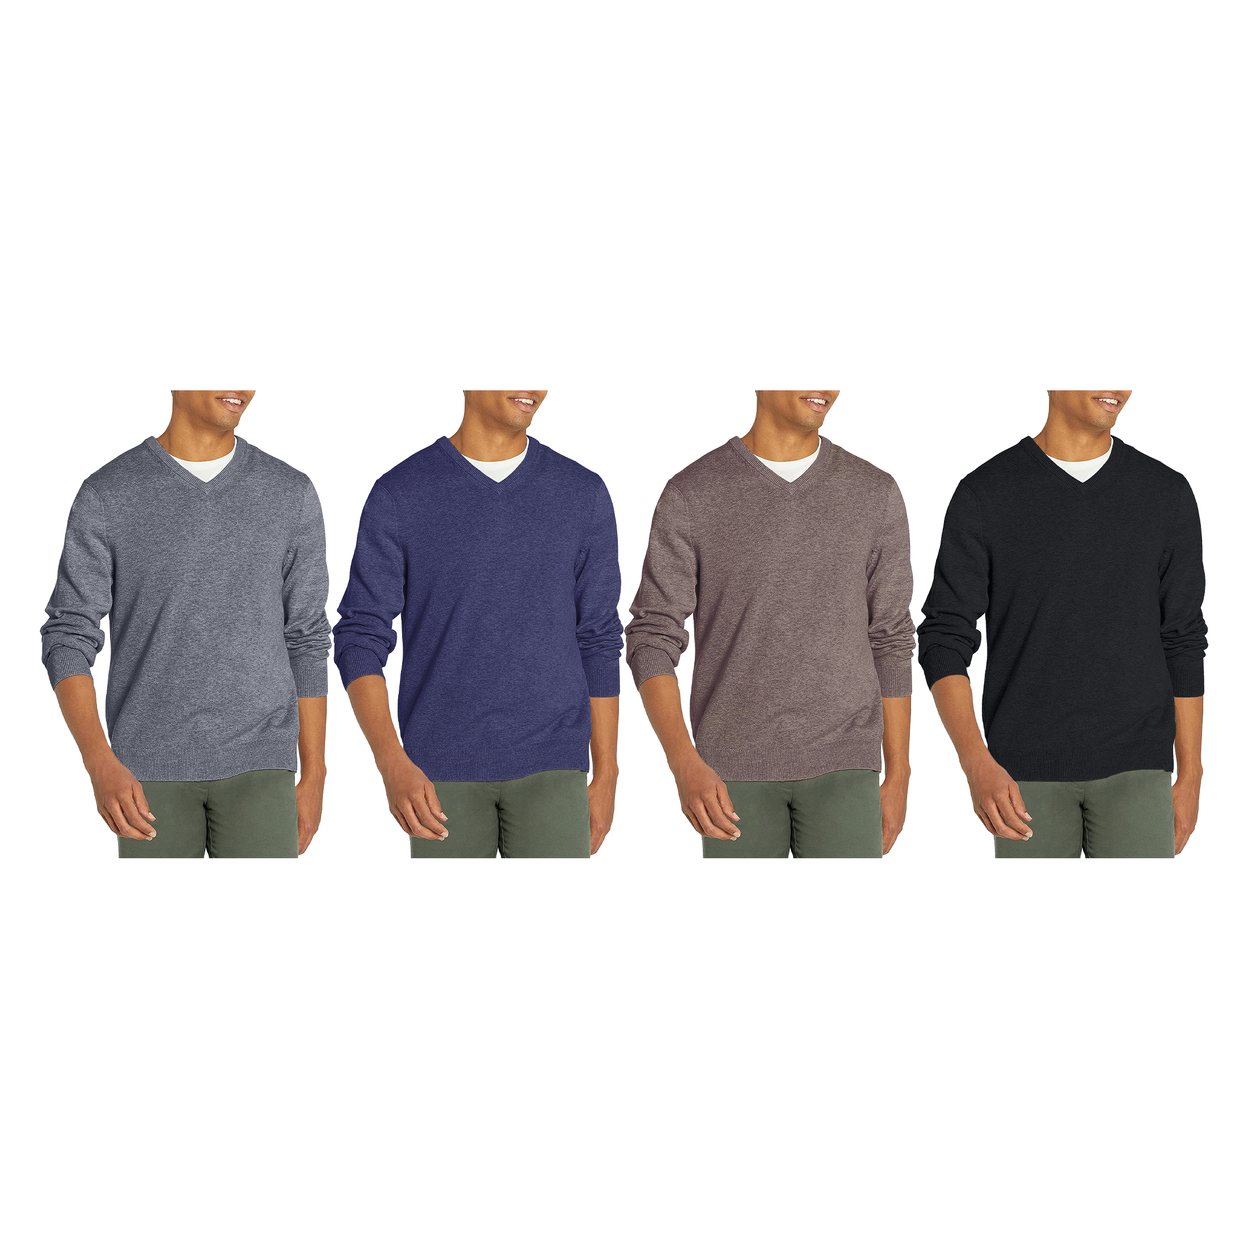 Men's Casual Ultra-Soft Slim Fit Warm Knit V-Neck Sweater - Black, X-large